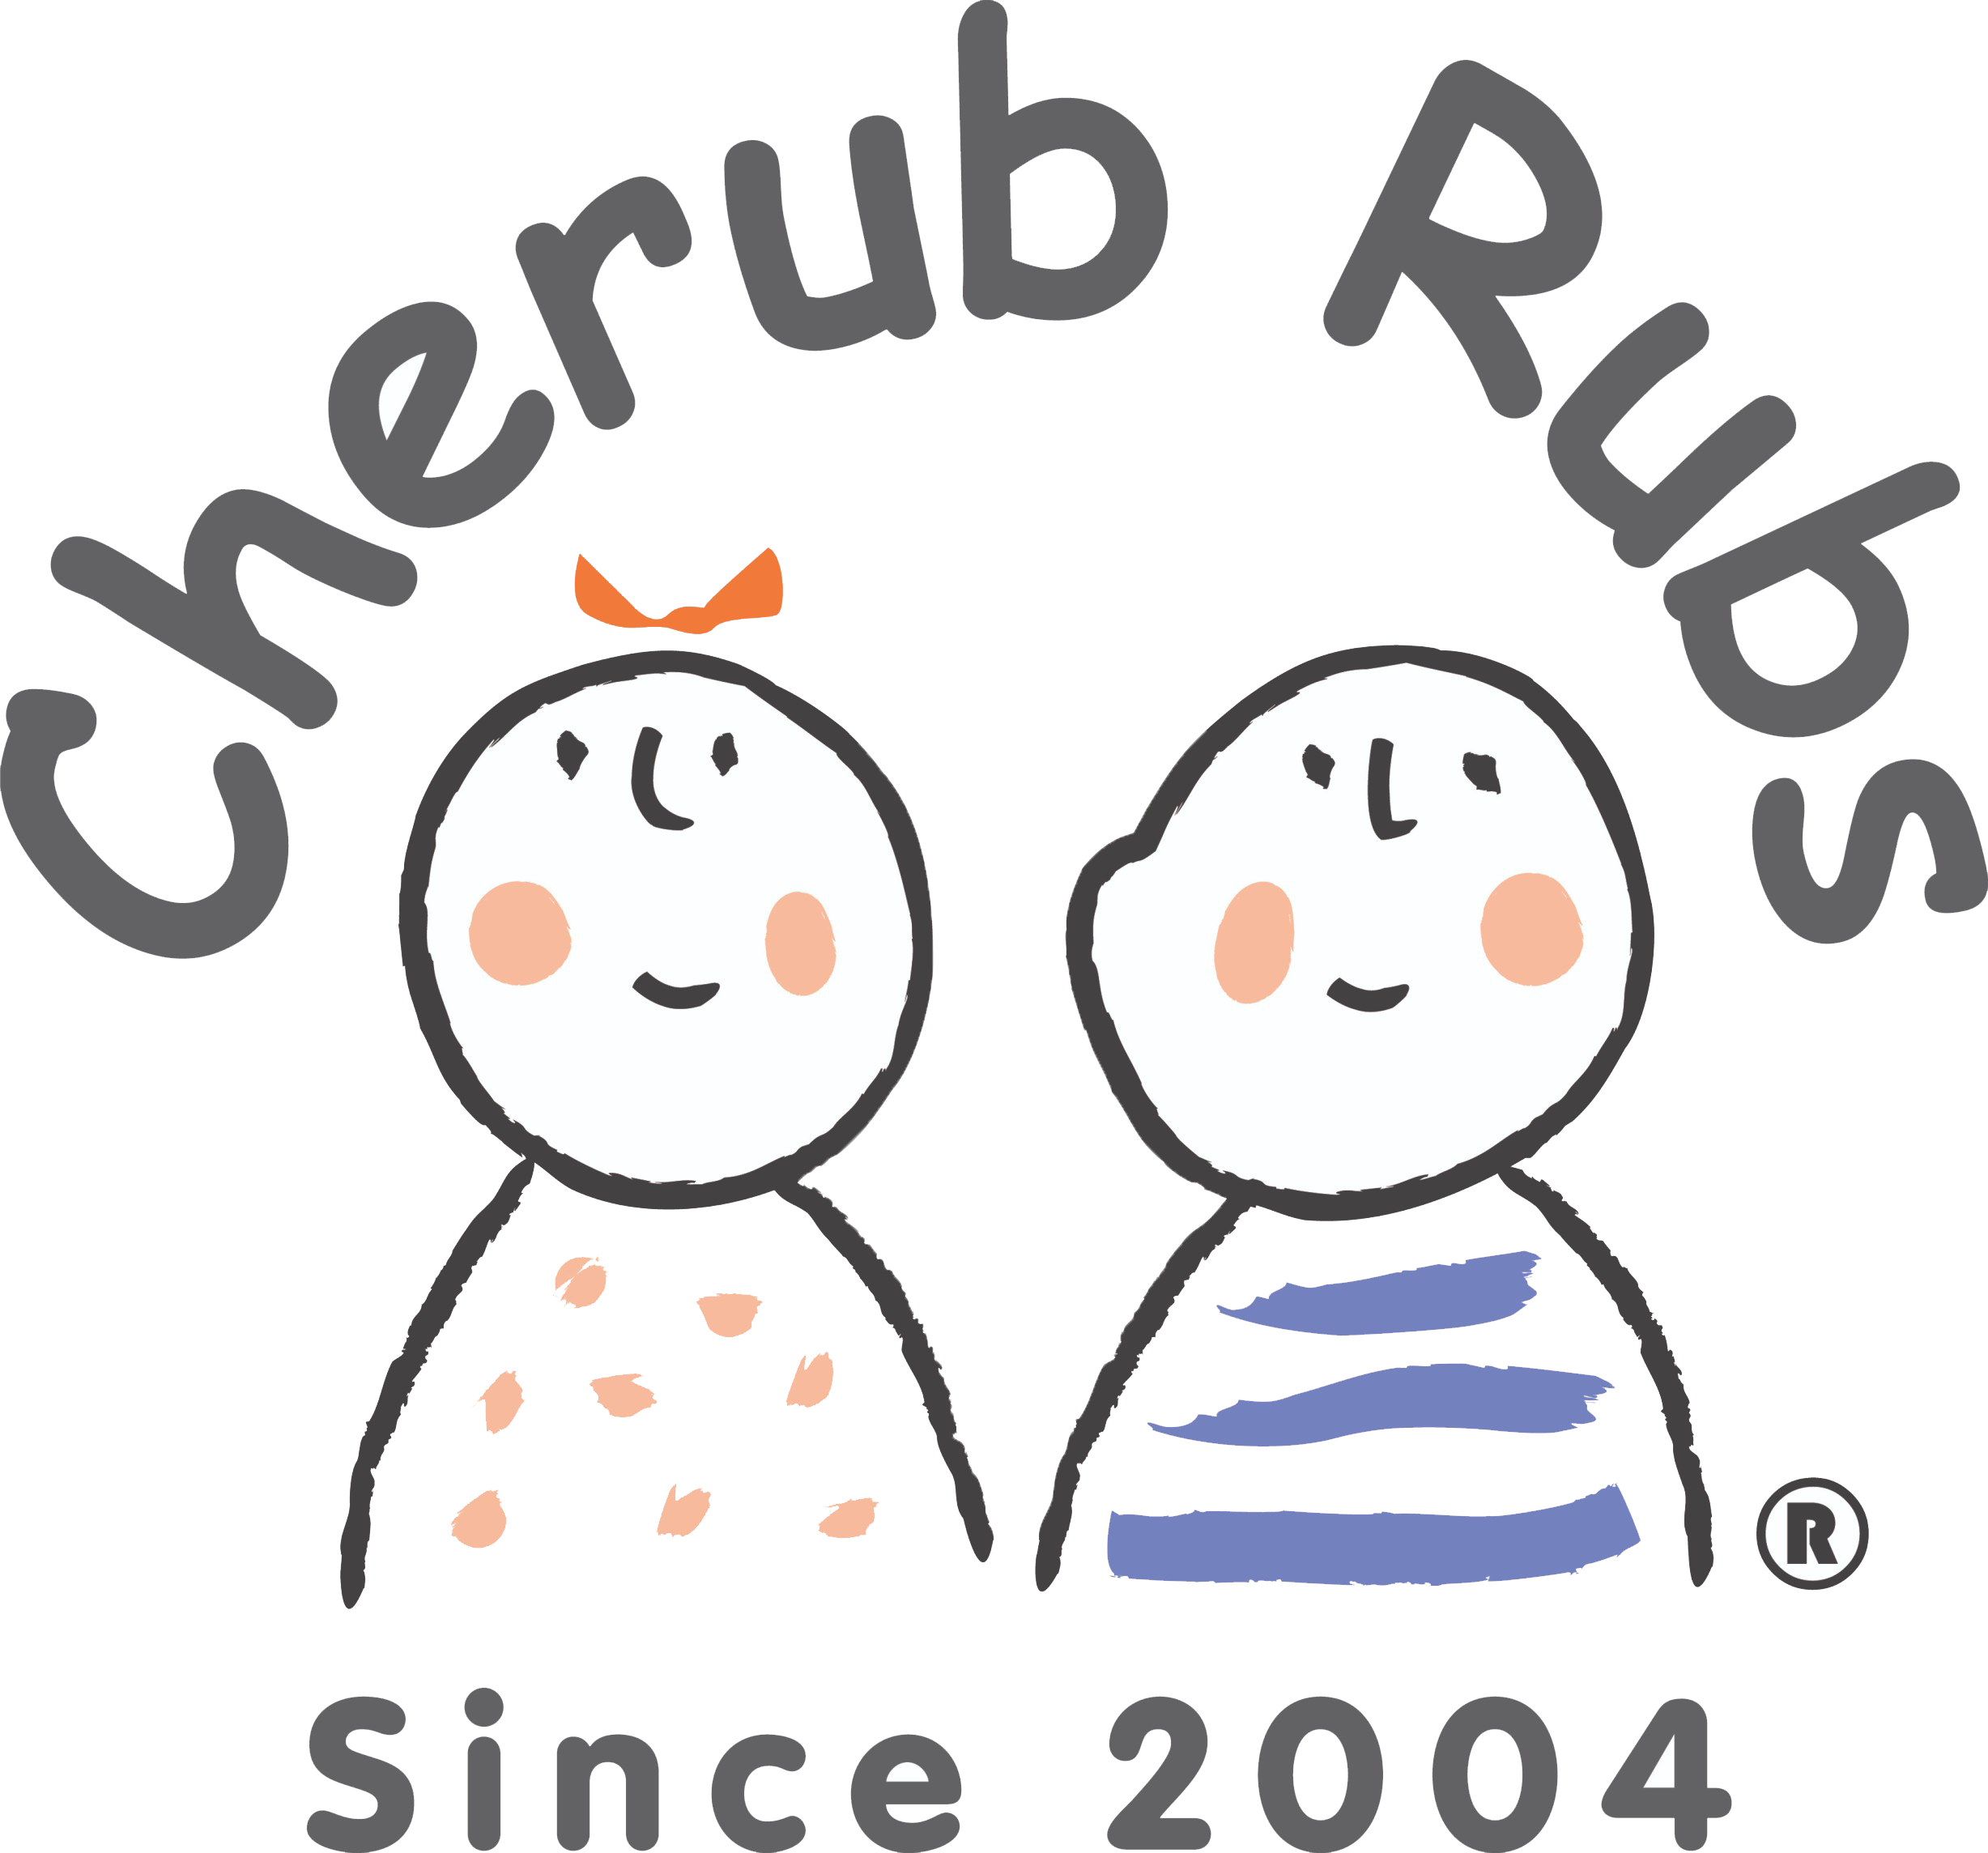 cherub-rubs-logo.png